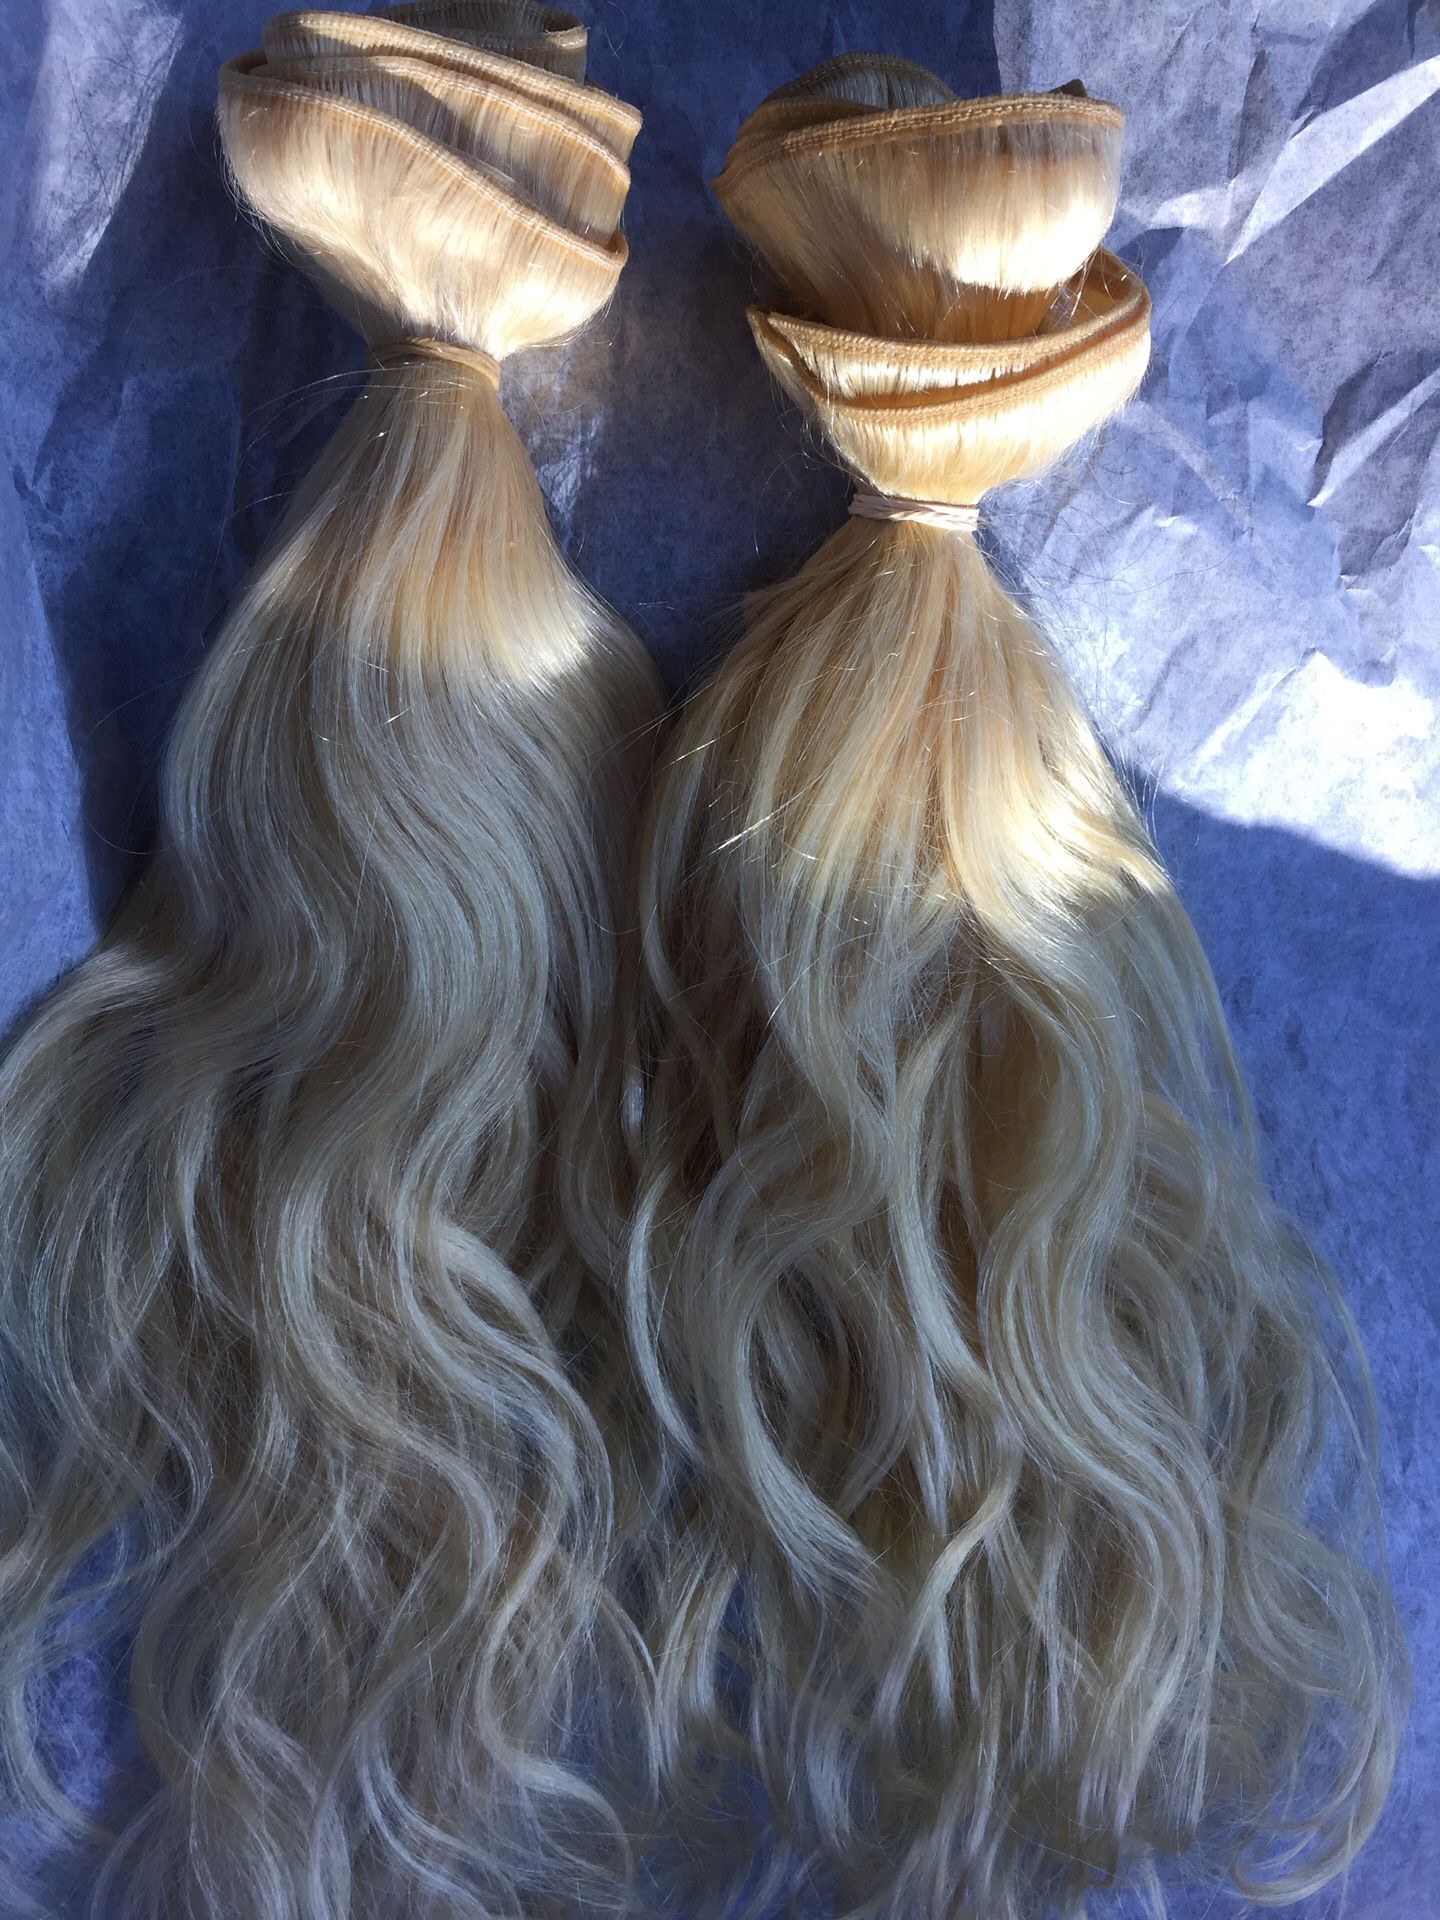 Mink Brazilian blonde bundles for sale $200